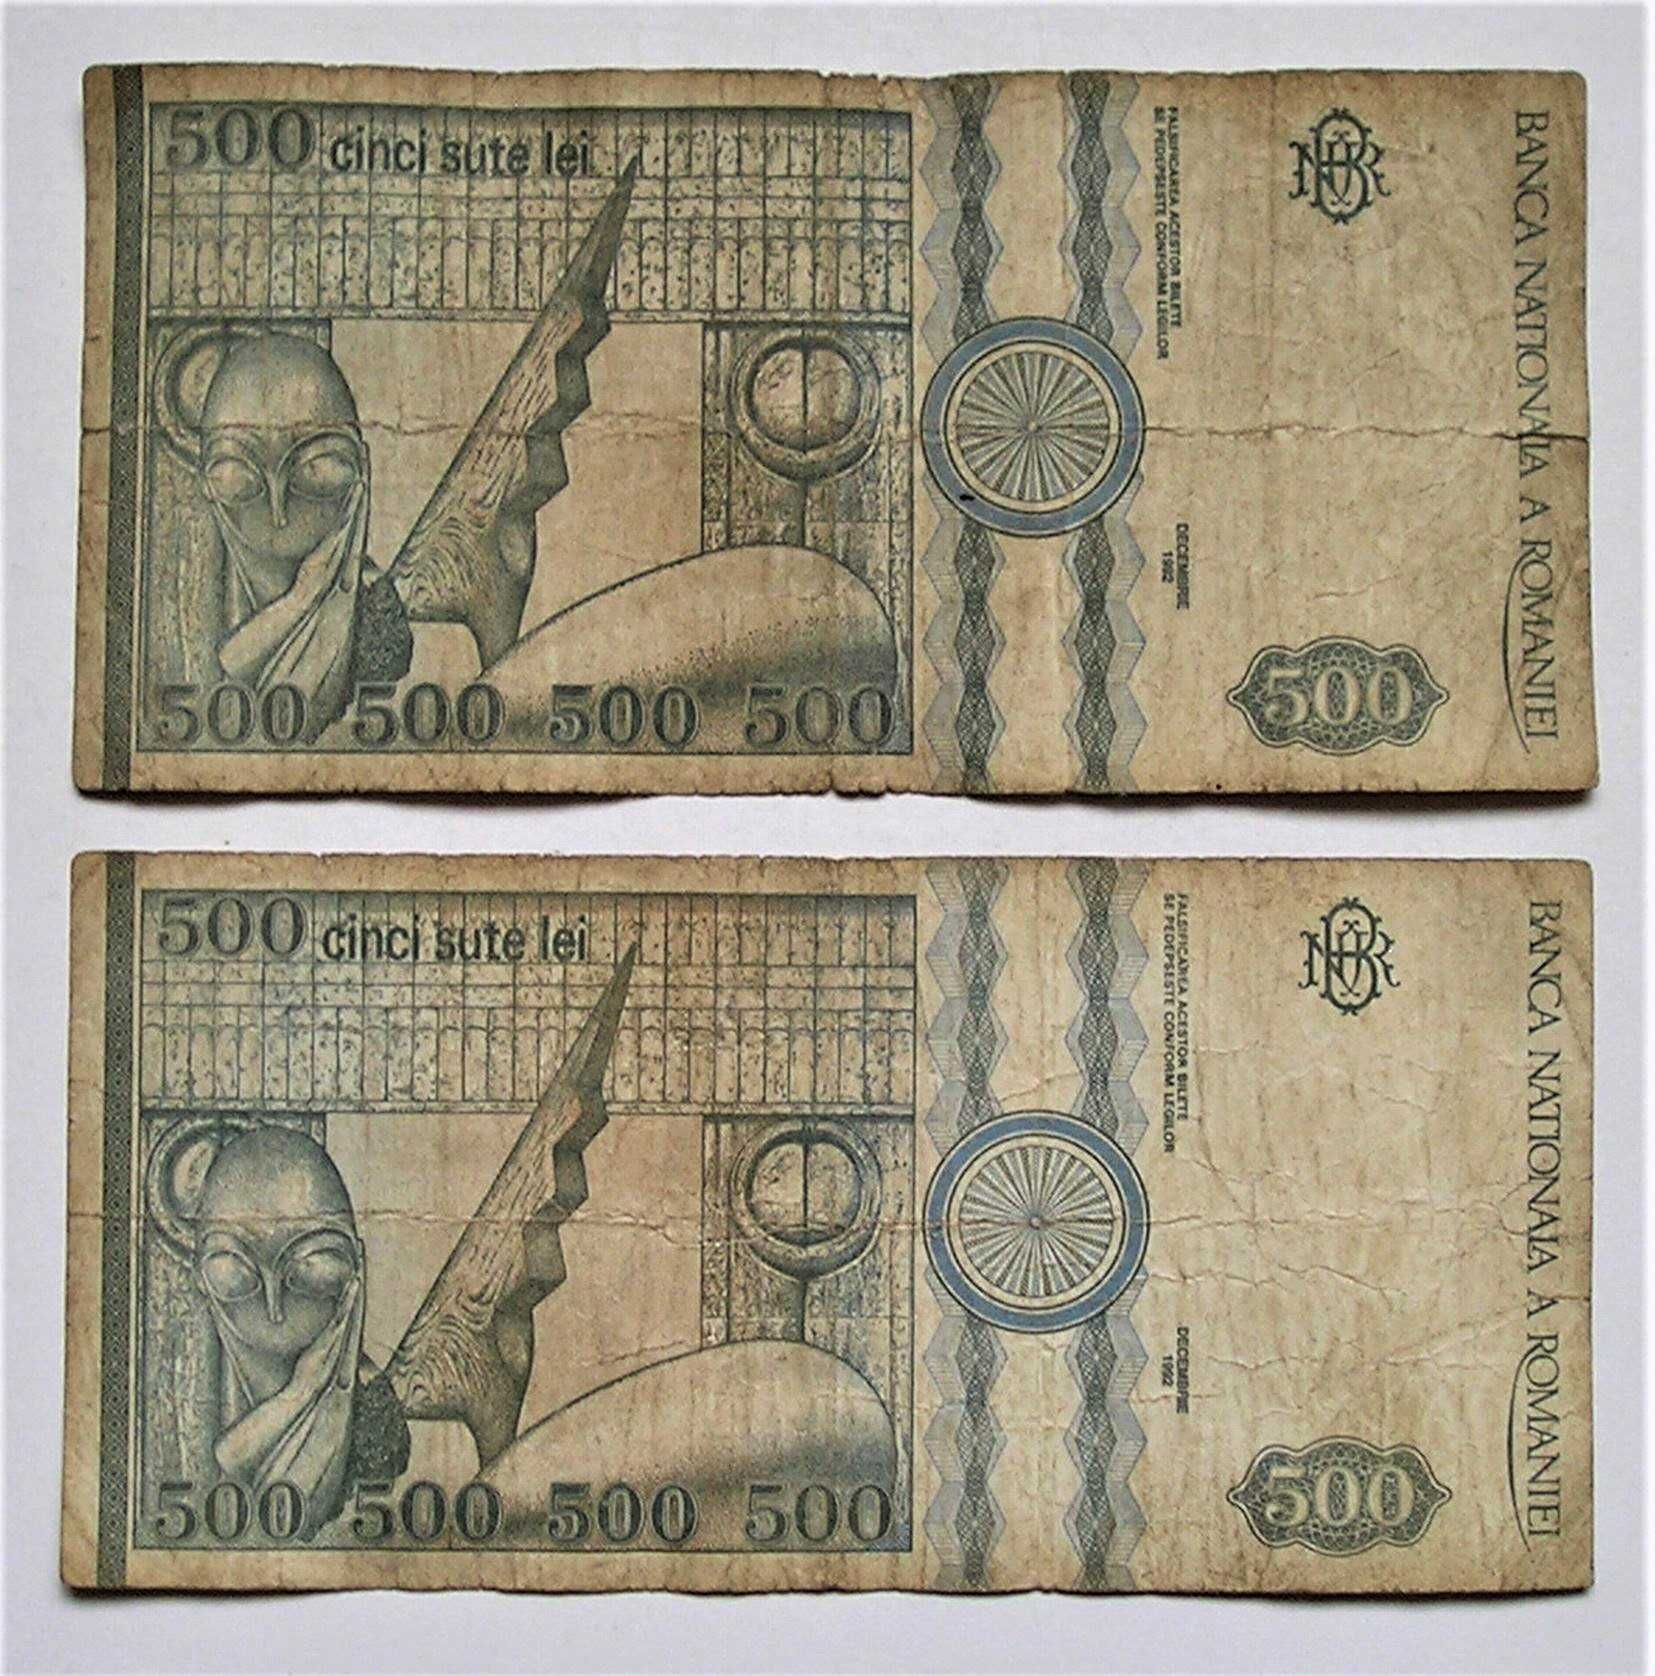 Банкнота 500 Румынских лей 1992 год, 500 cinci sute lei Romania 1992